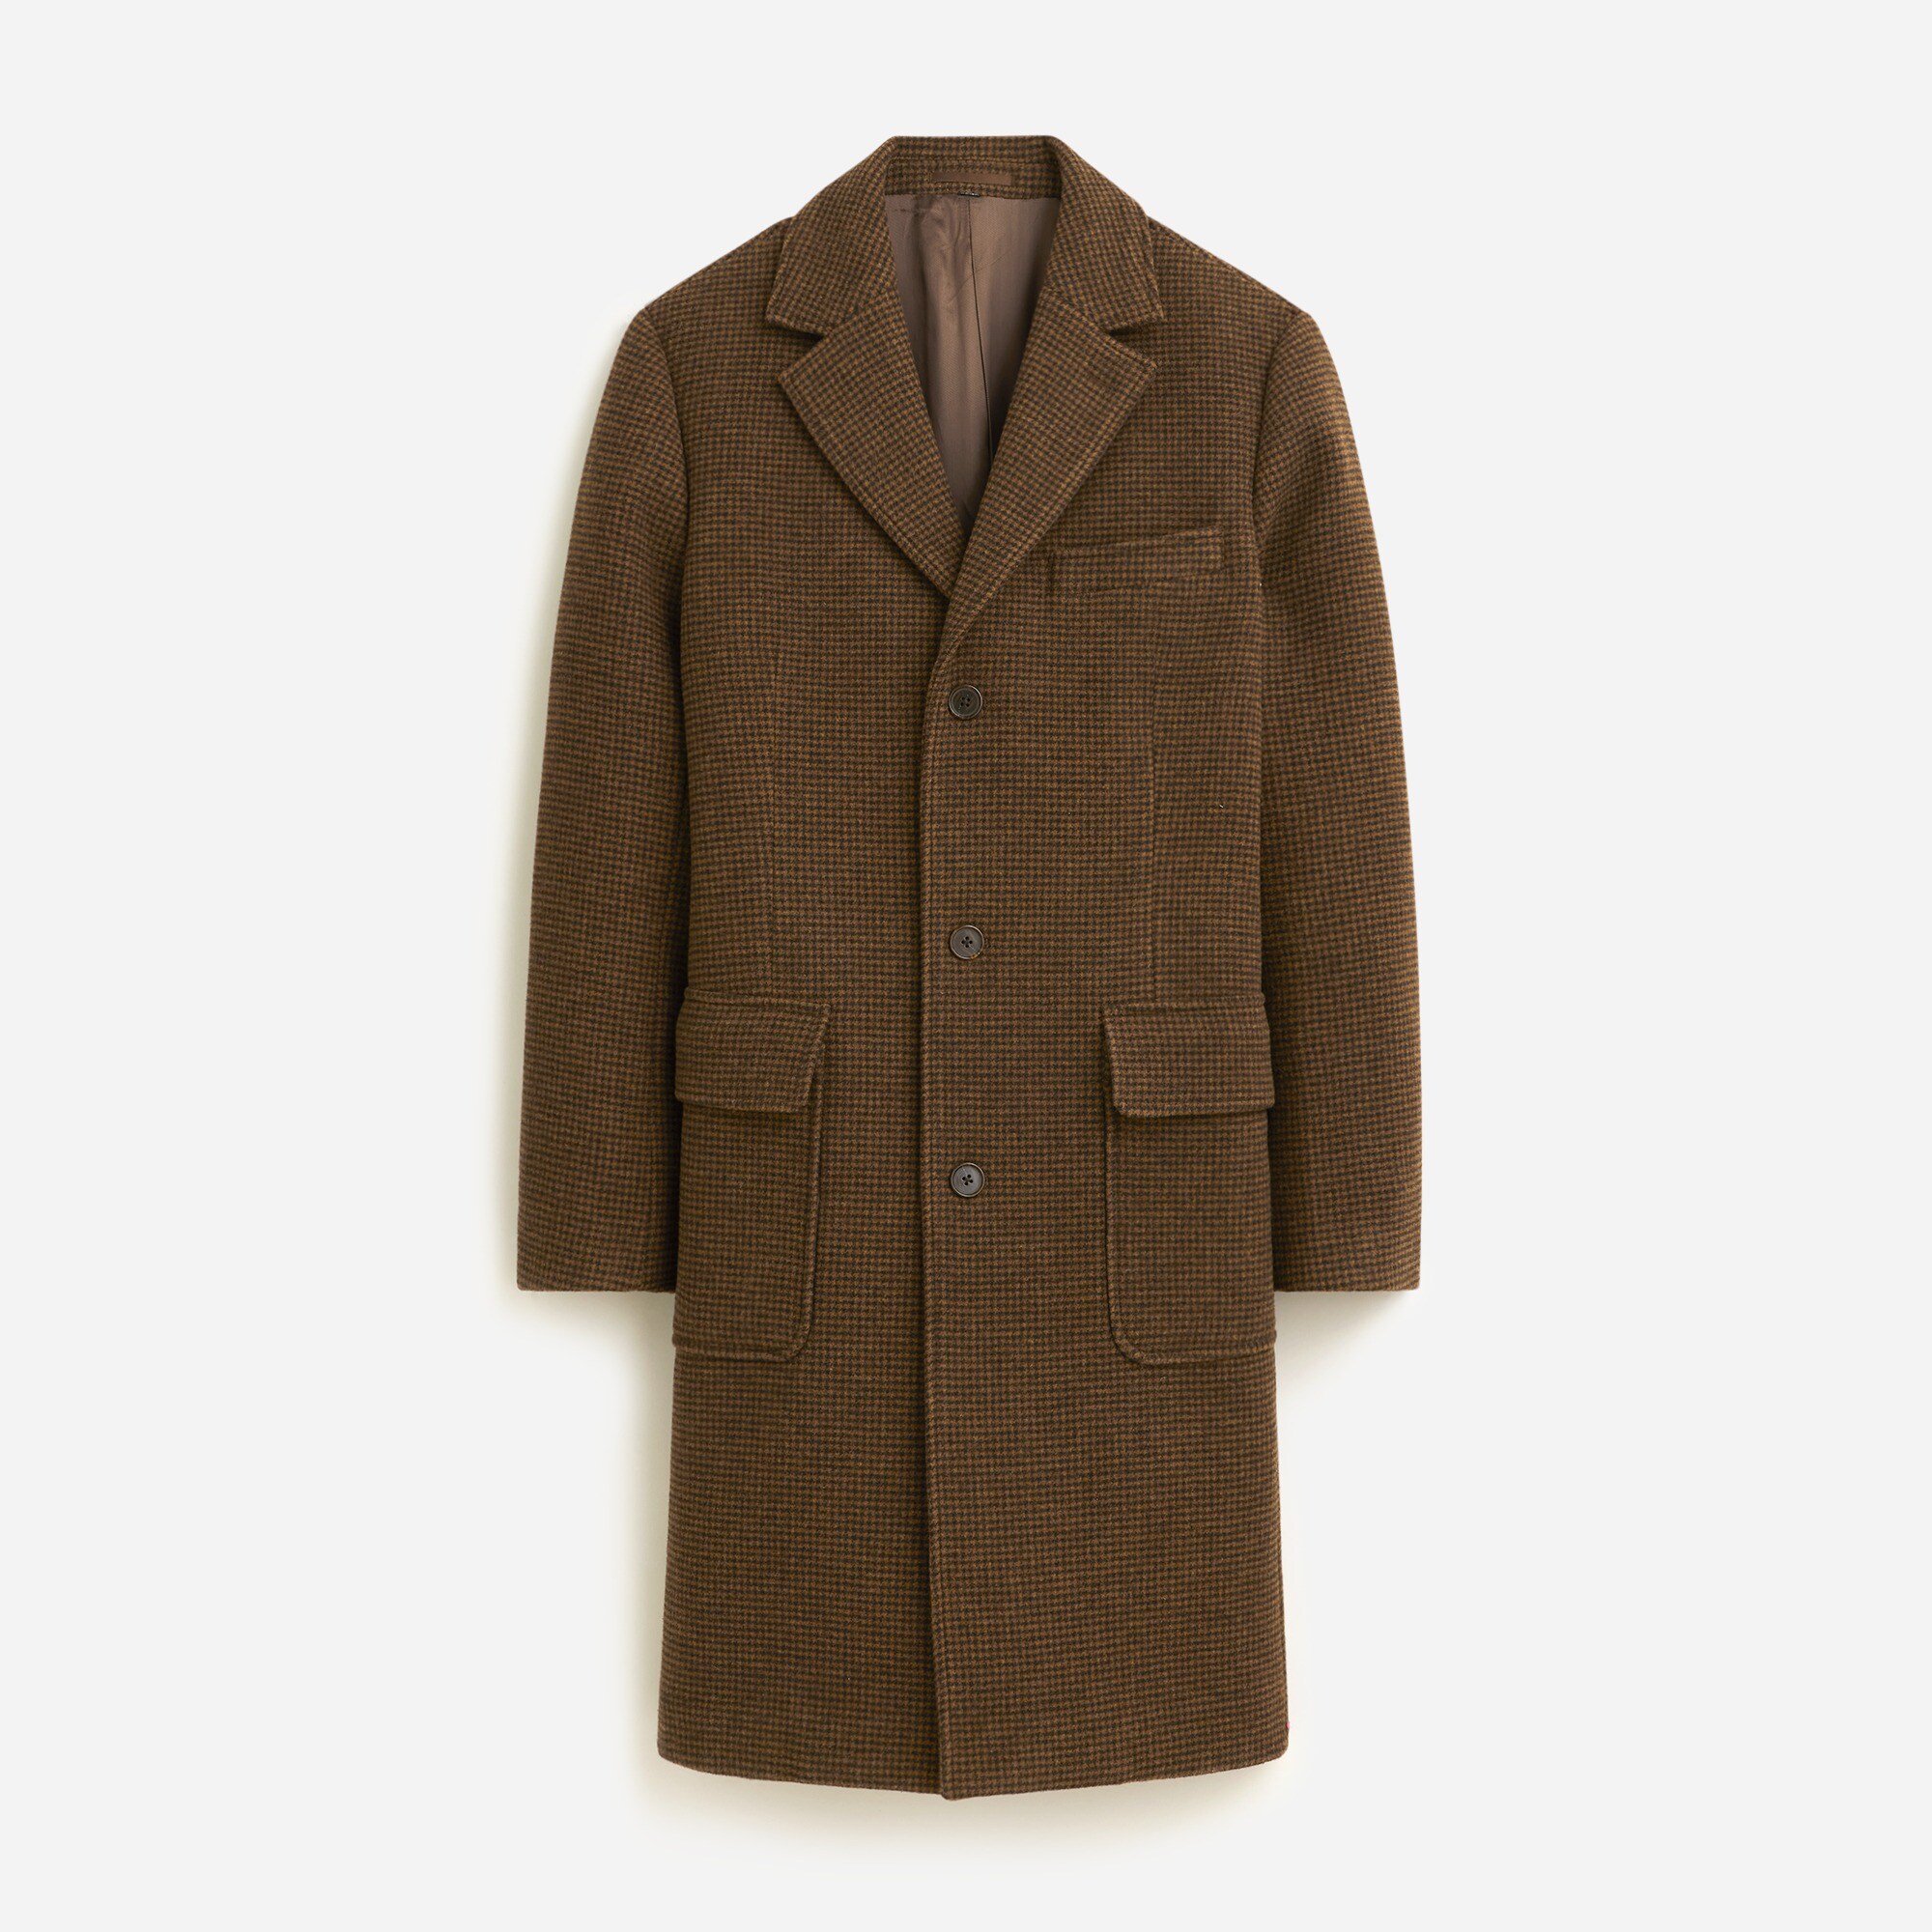  Ludlow topcoat in wool blend